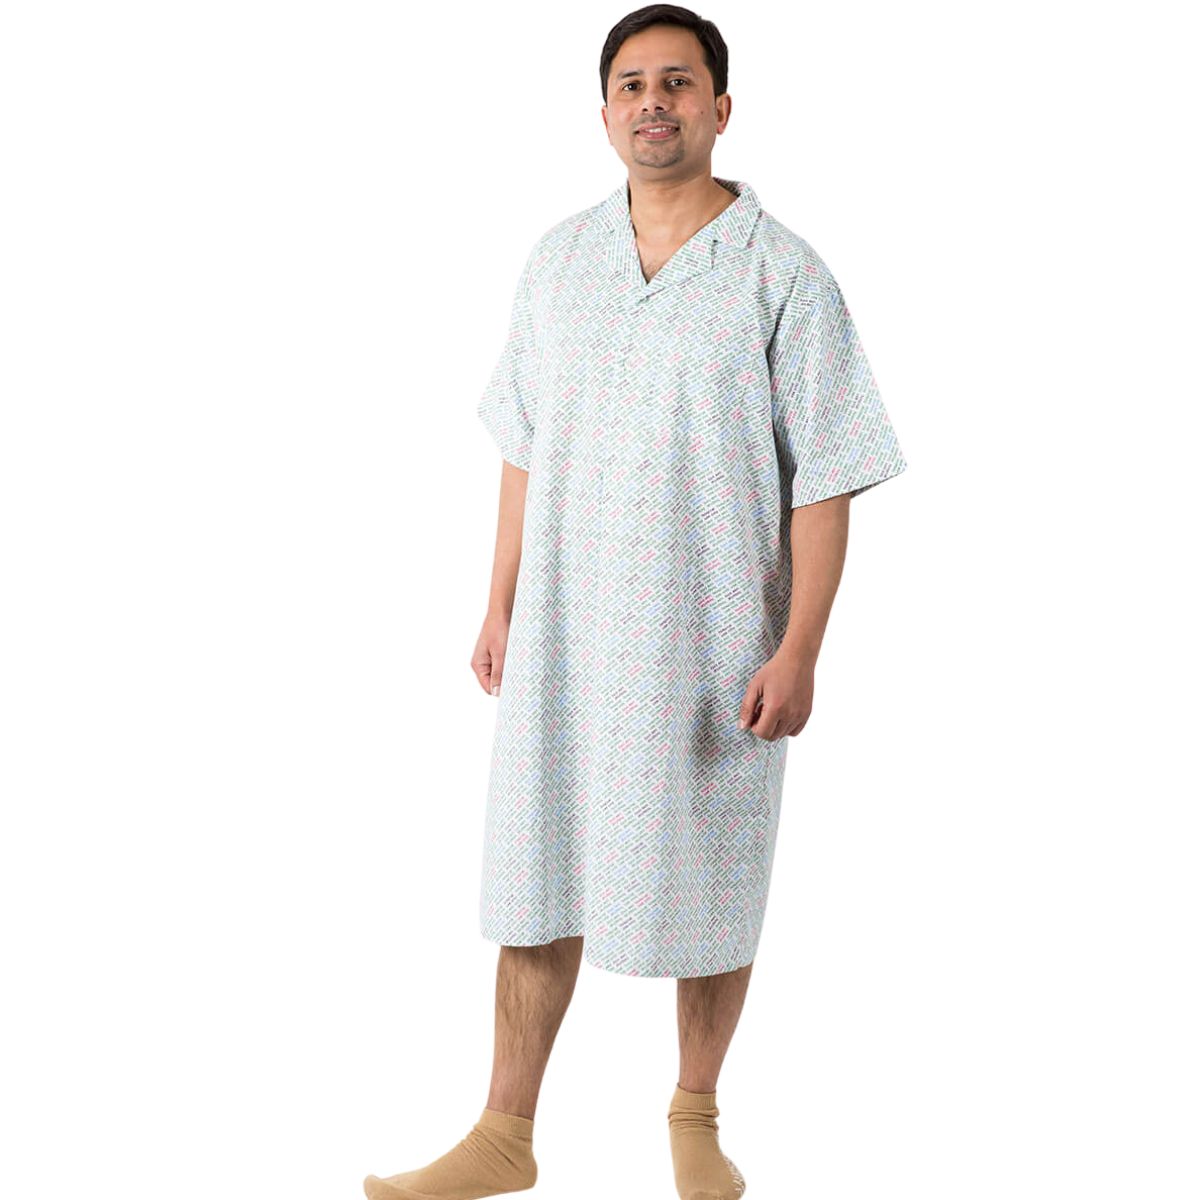 Hospital nightshirt